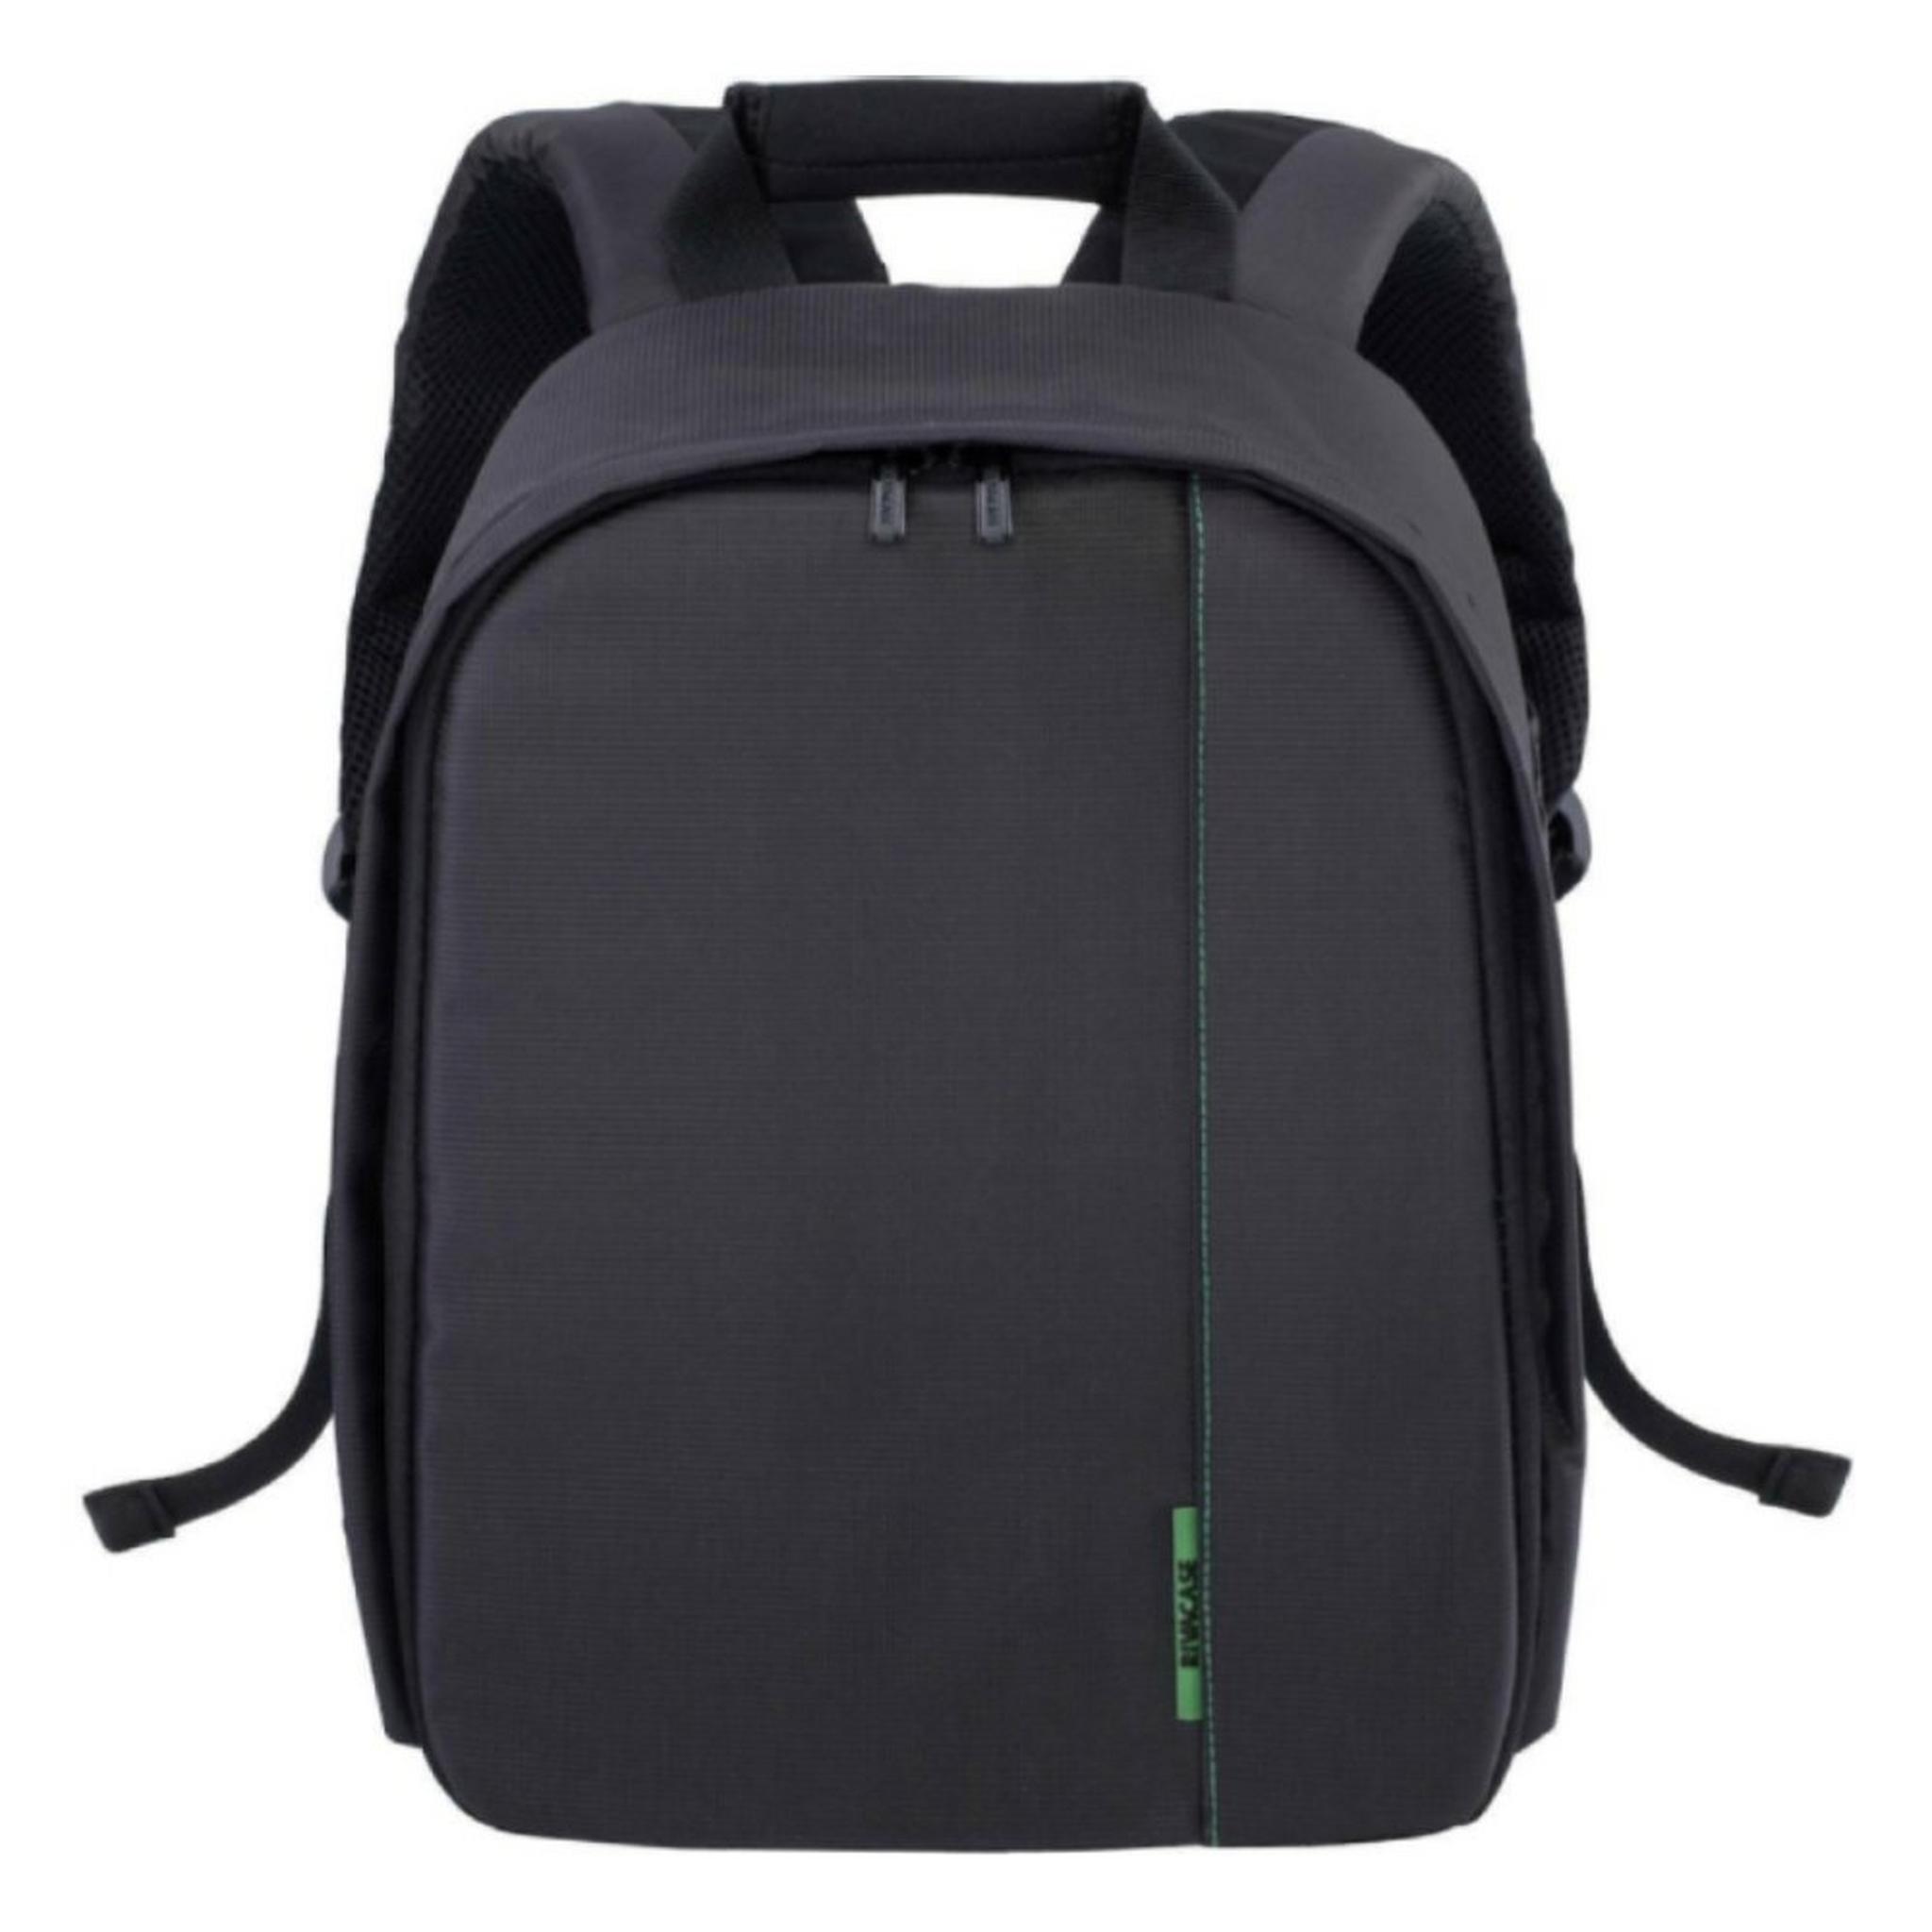 Riva 7460 SLR Camera Backpack - Black